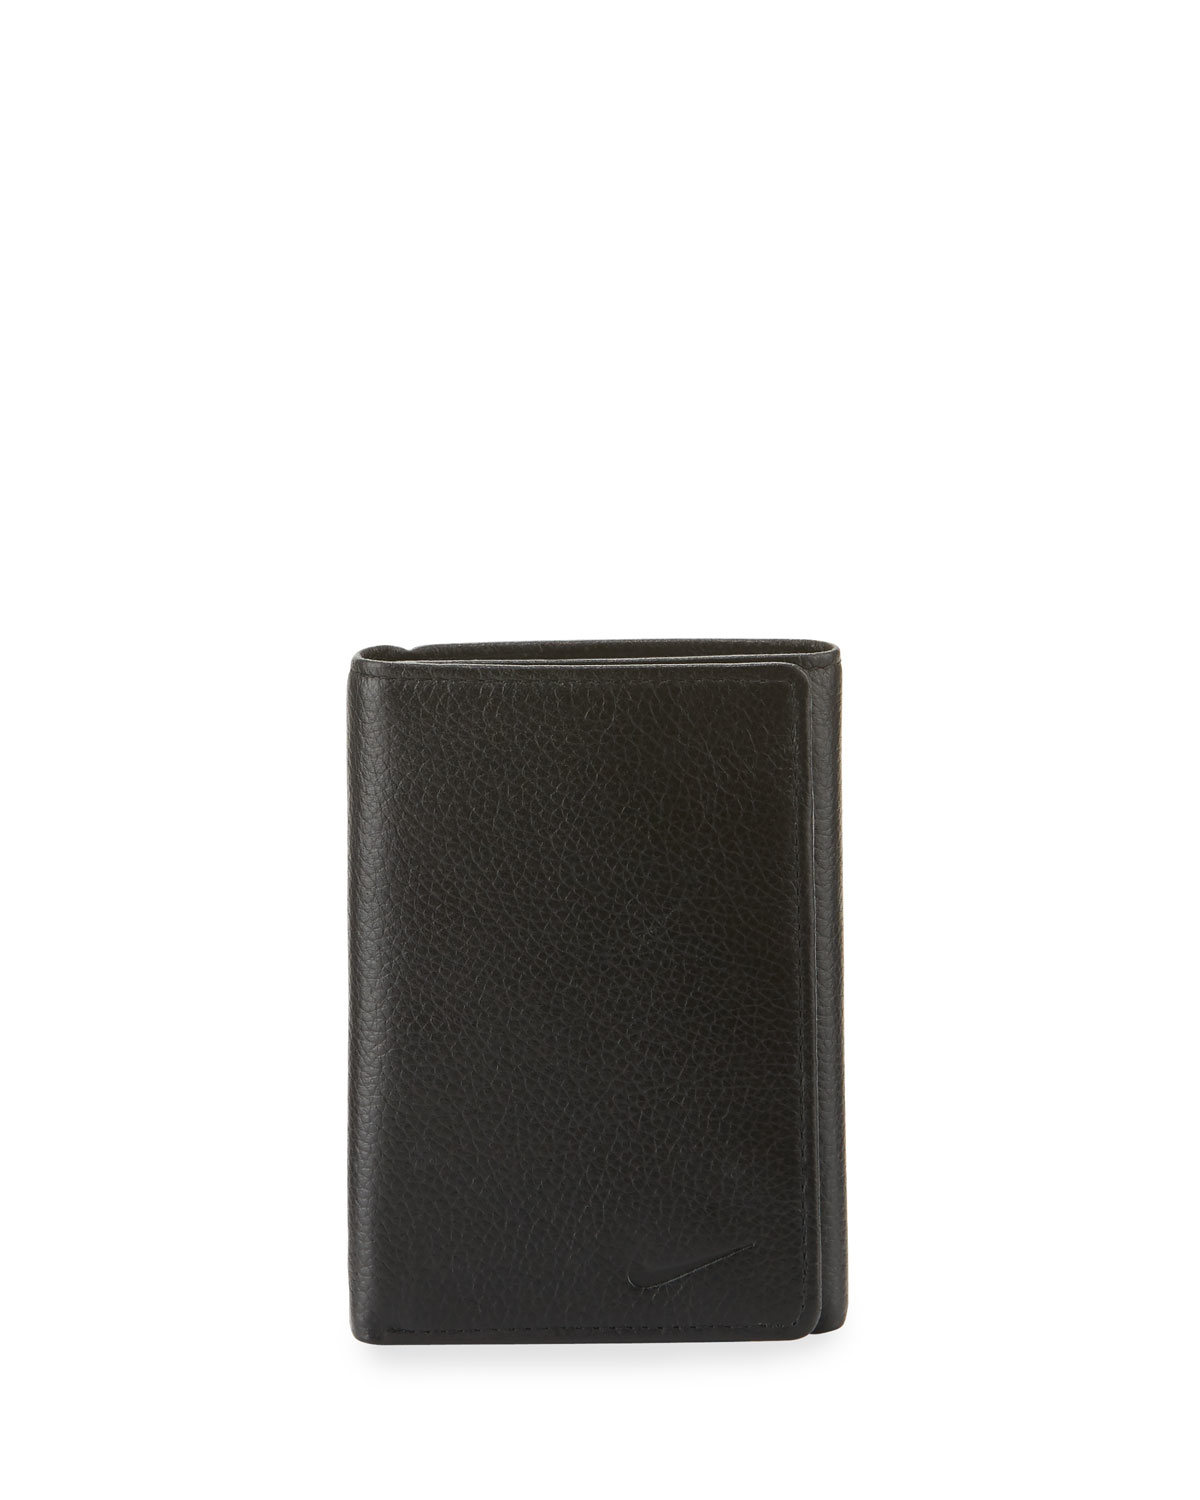 Lyst - Nike Leather Tri-fold Wallet in Black for Men